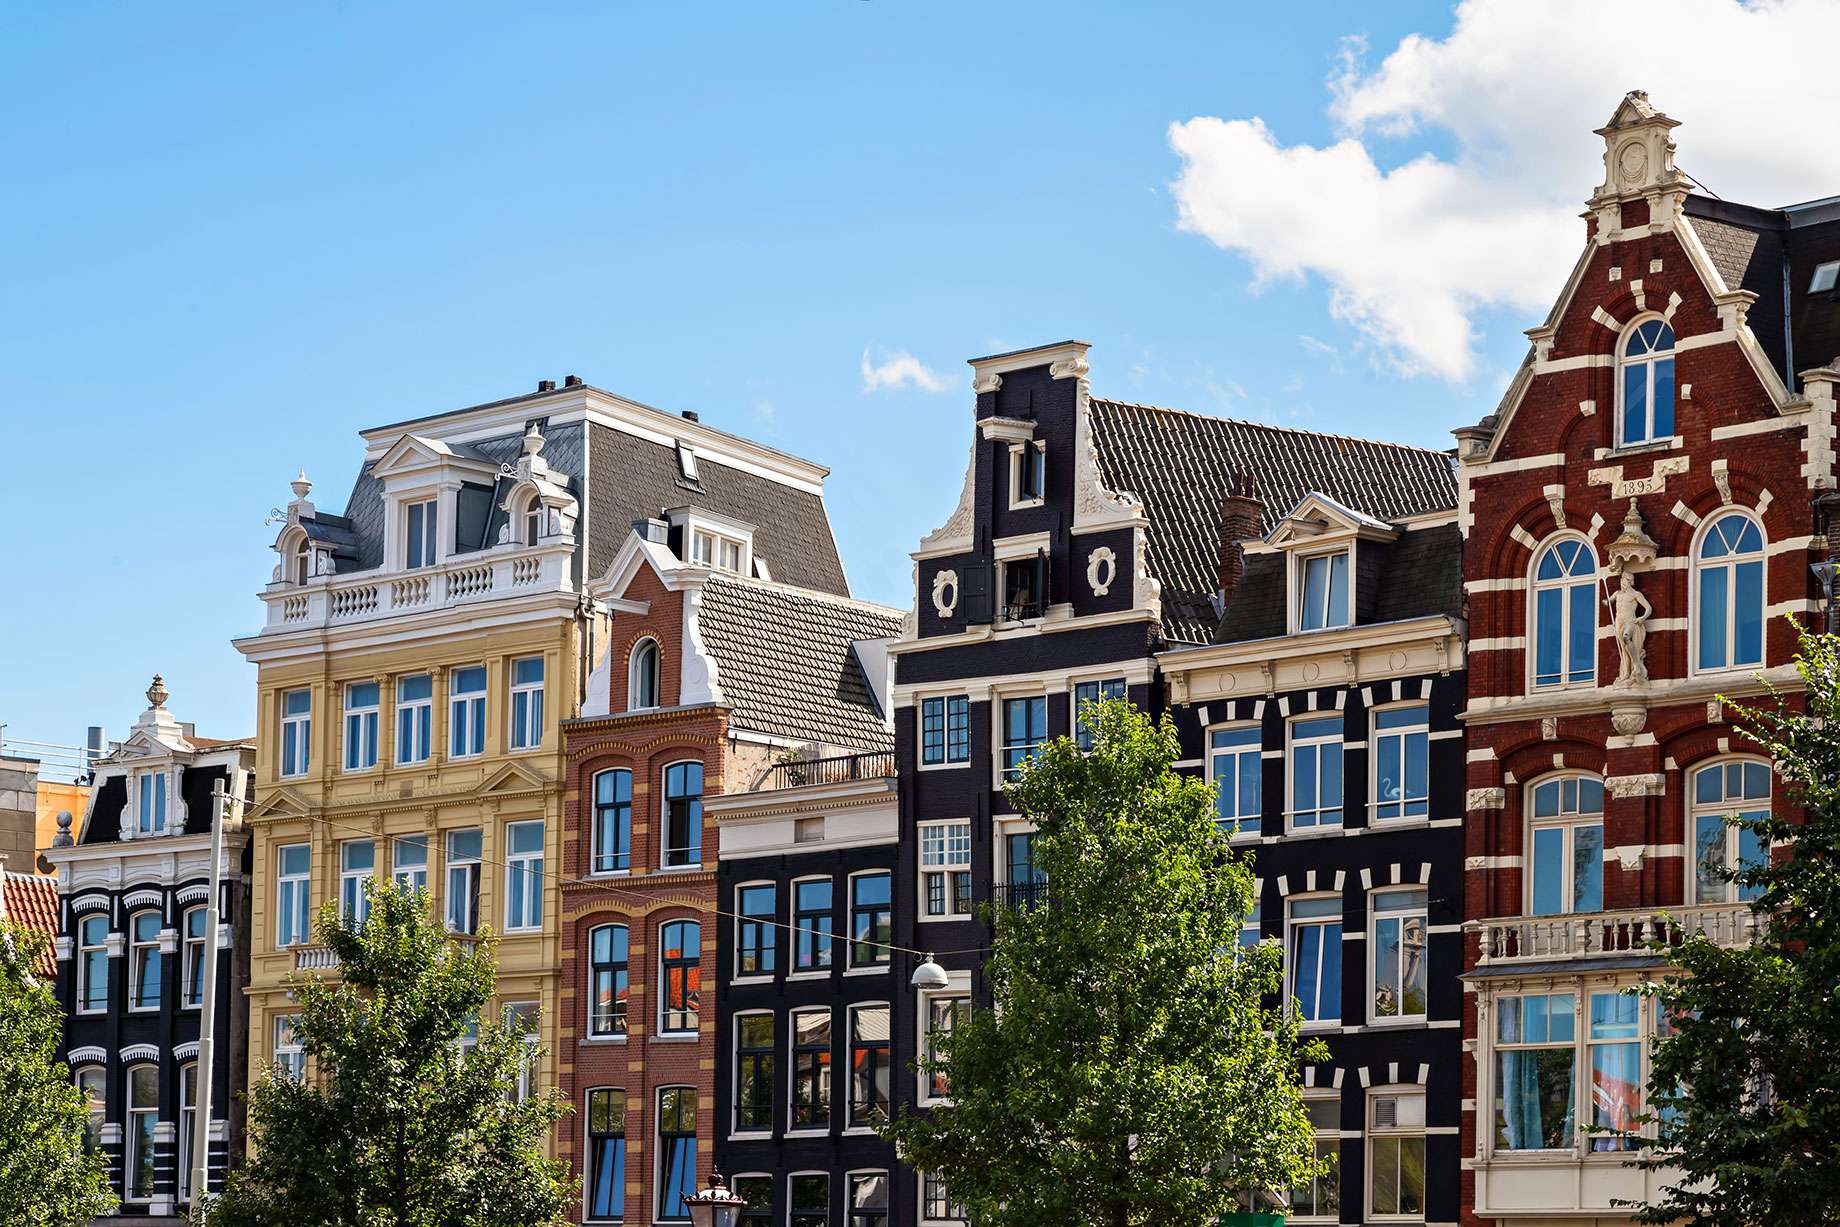 Historic Façades - Amsterdam, Netherlands